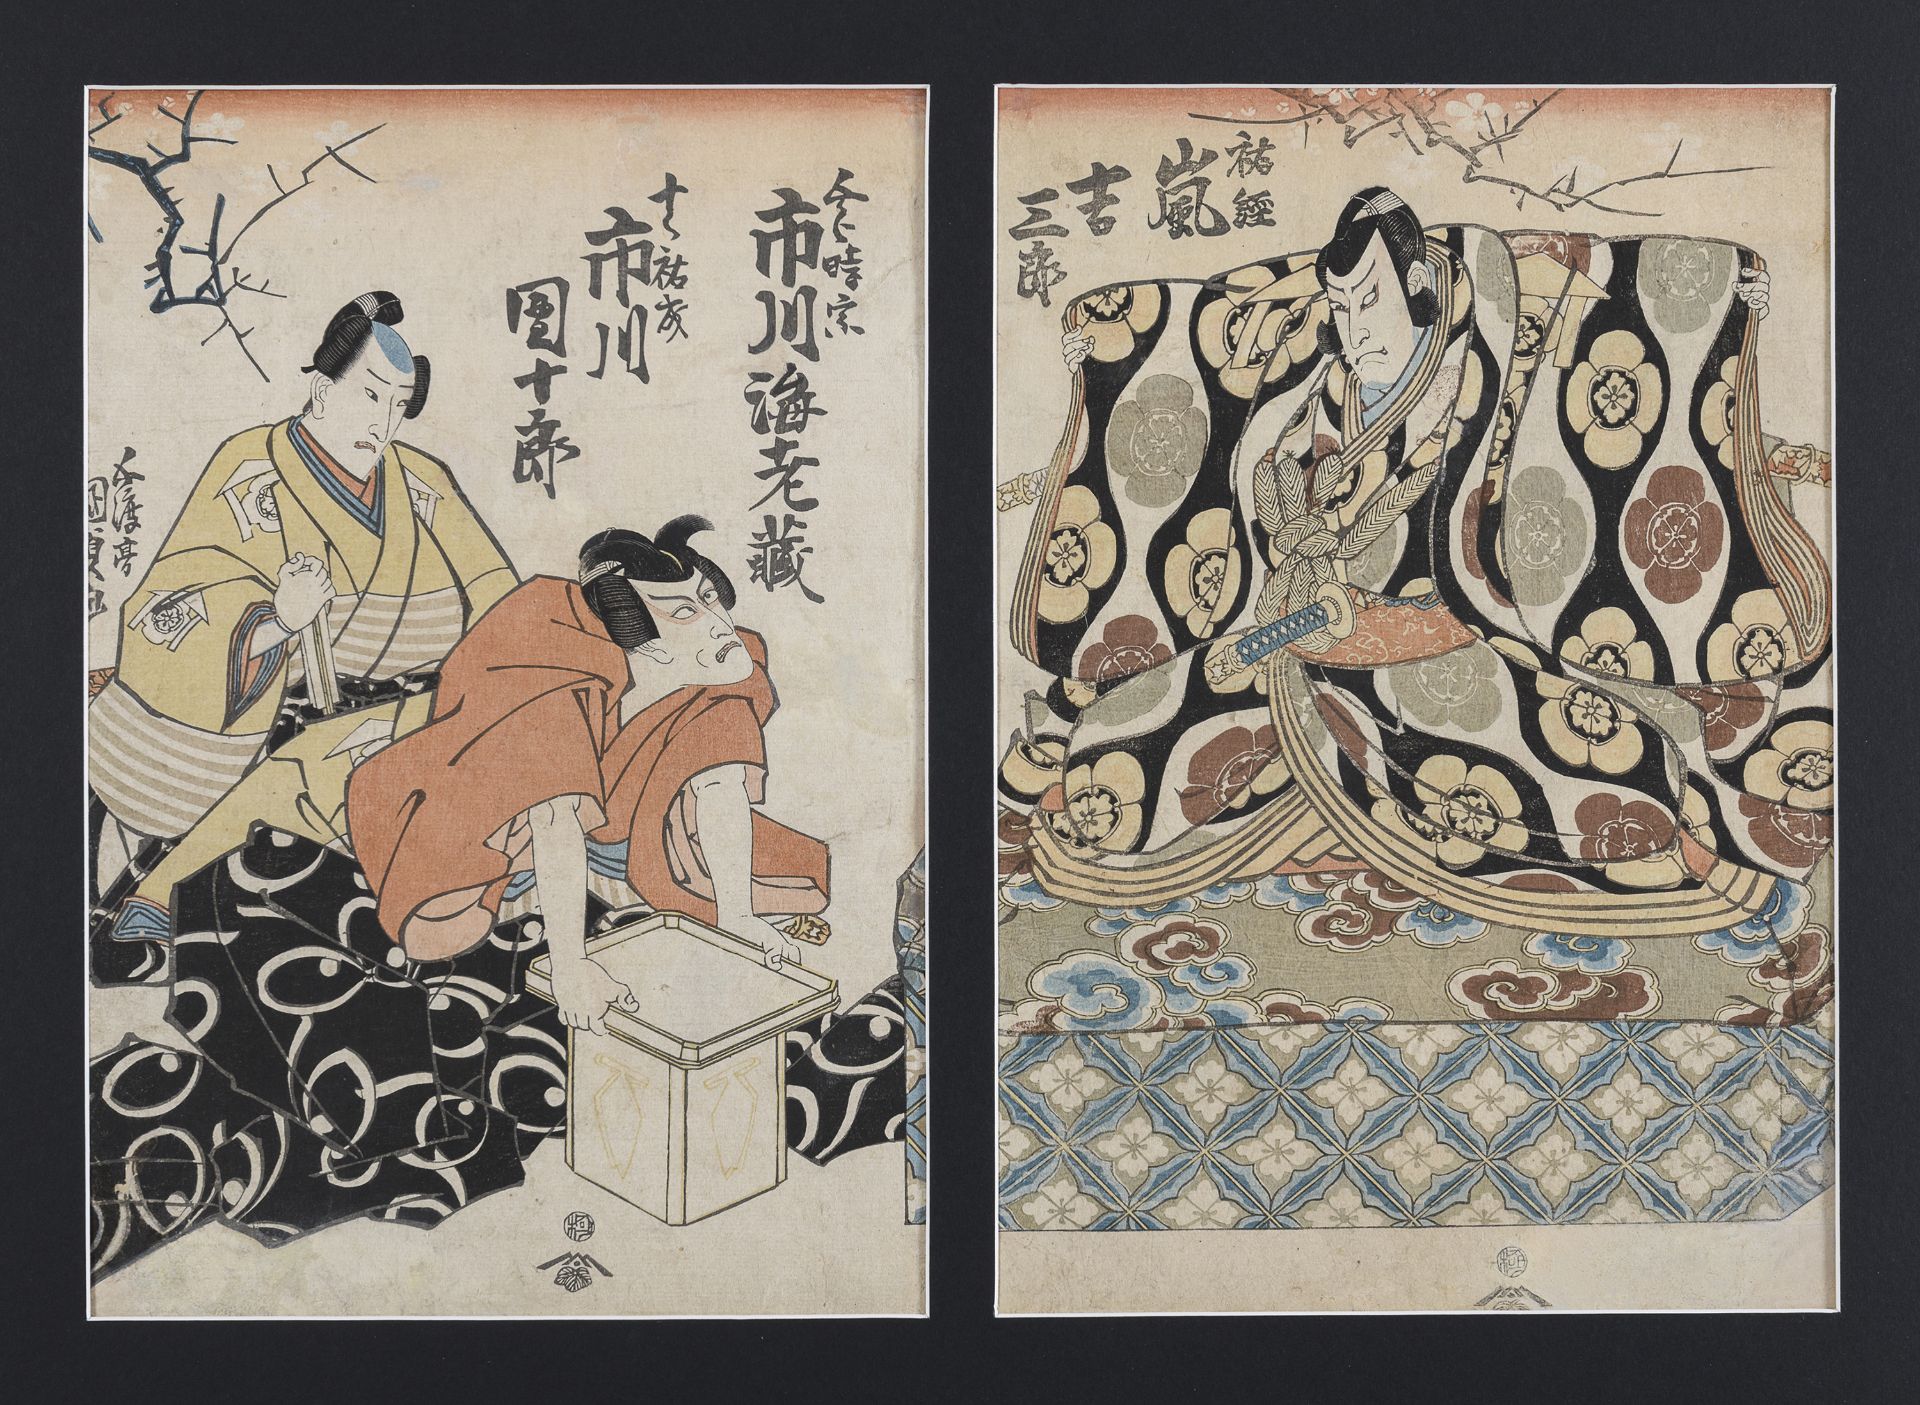 TWO JAPANESE POLYCHROME WOODBLOCK PRINTS ON PAPER BY UTAGAWA KUNISADA